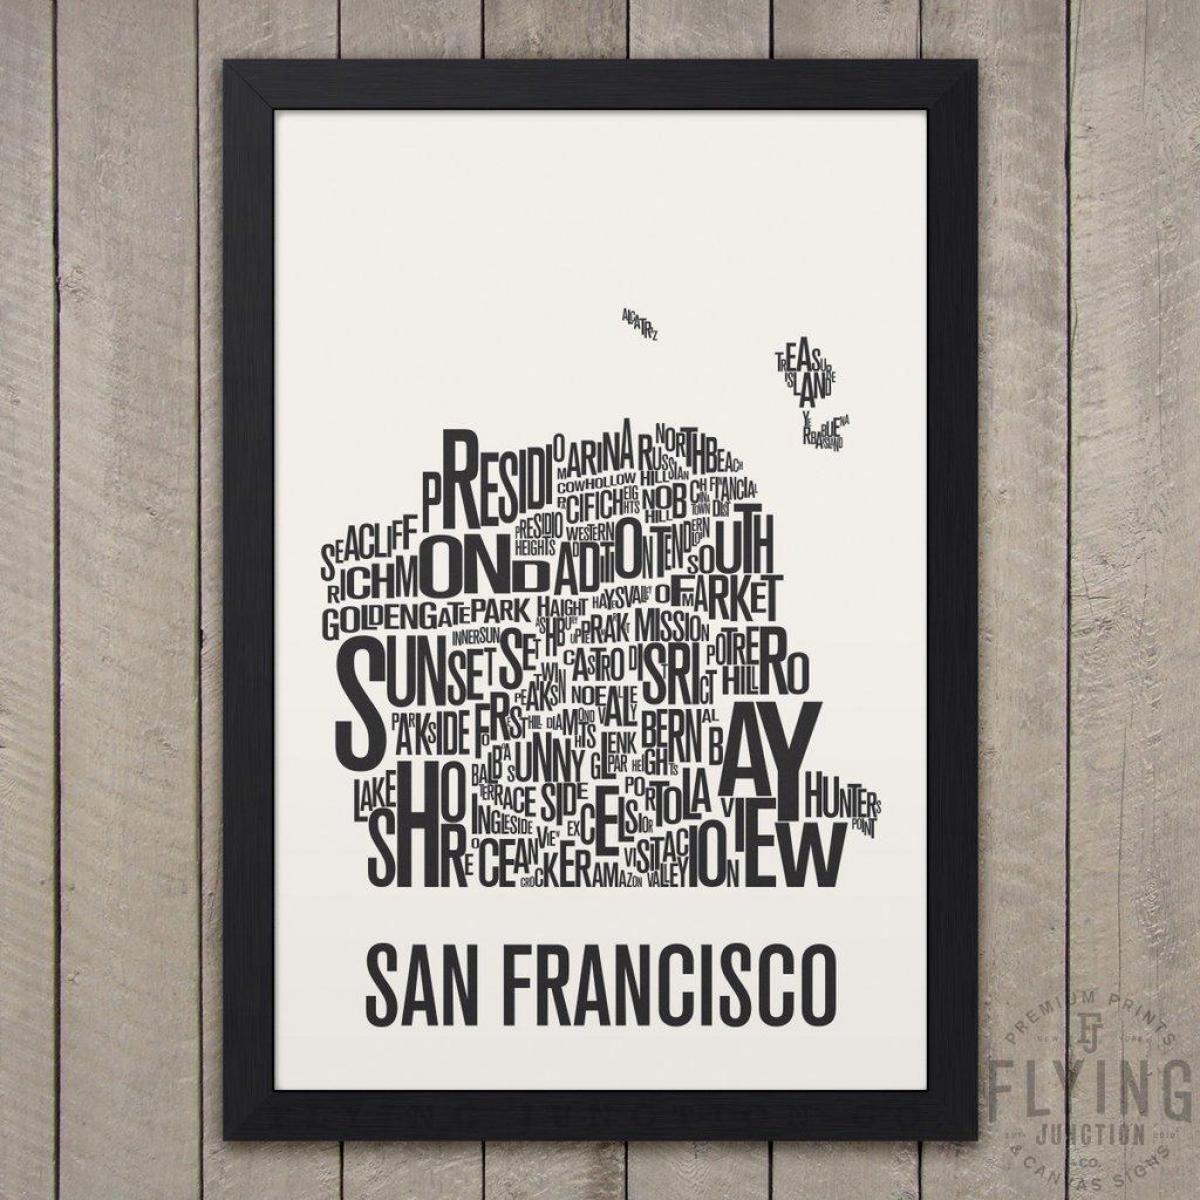 San Francisco tipografi göster